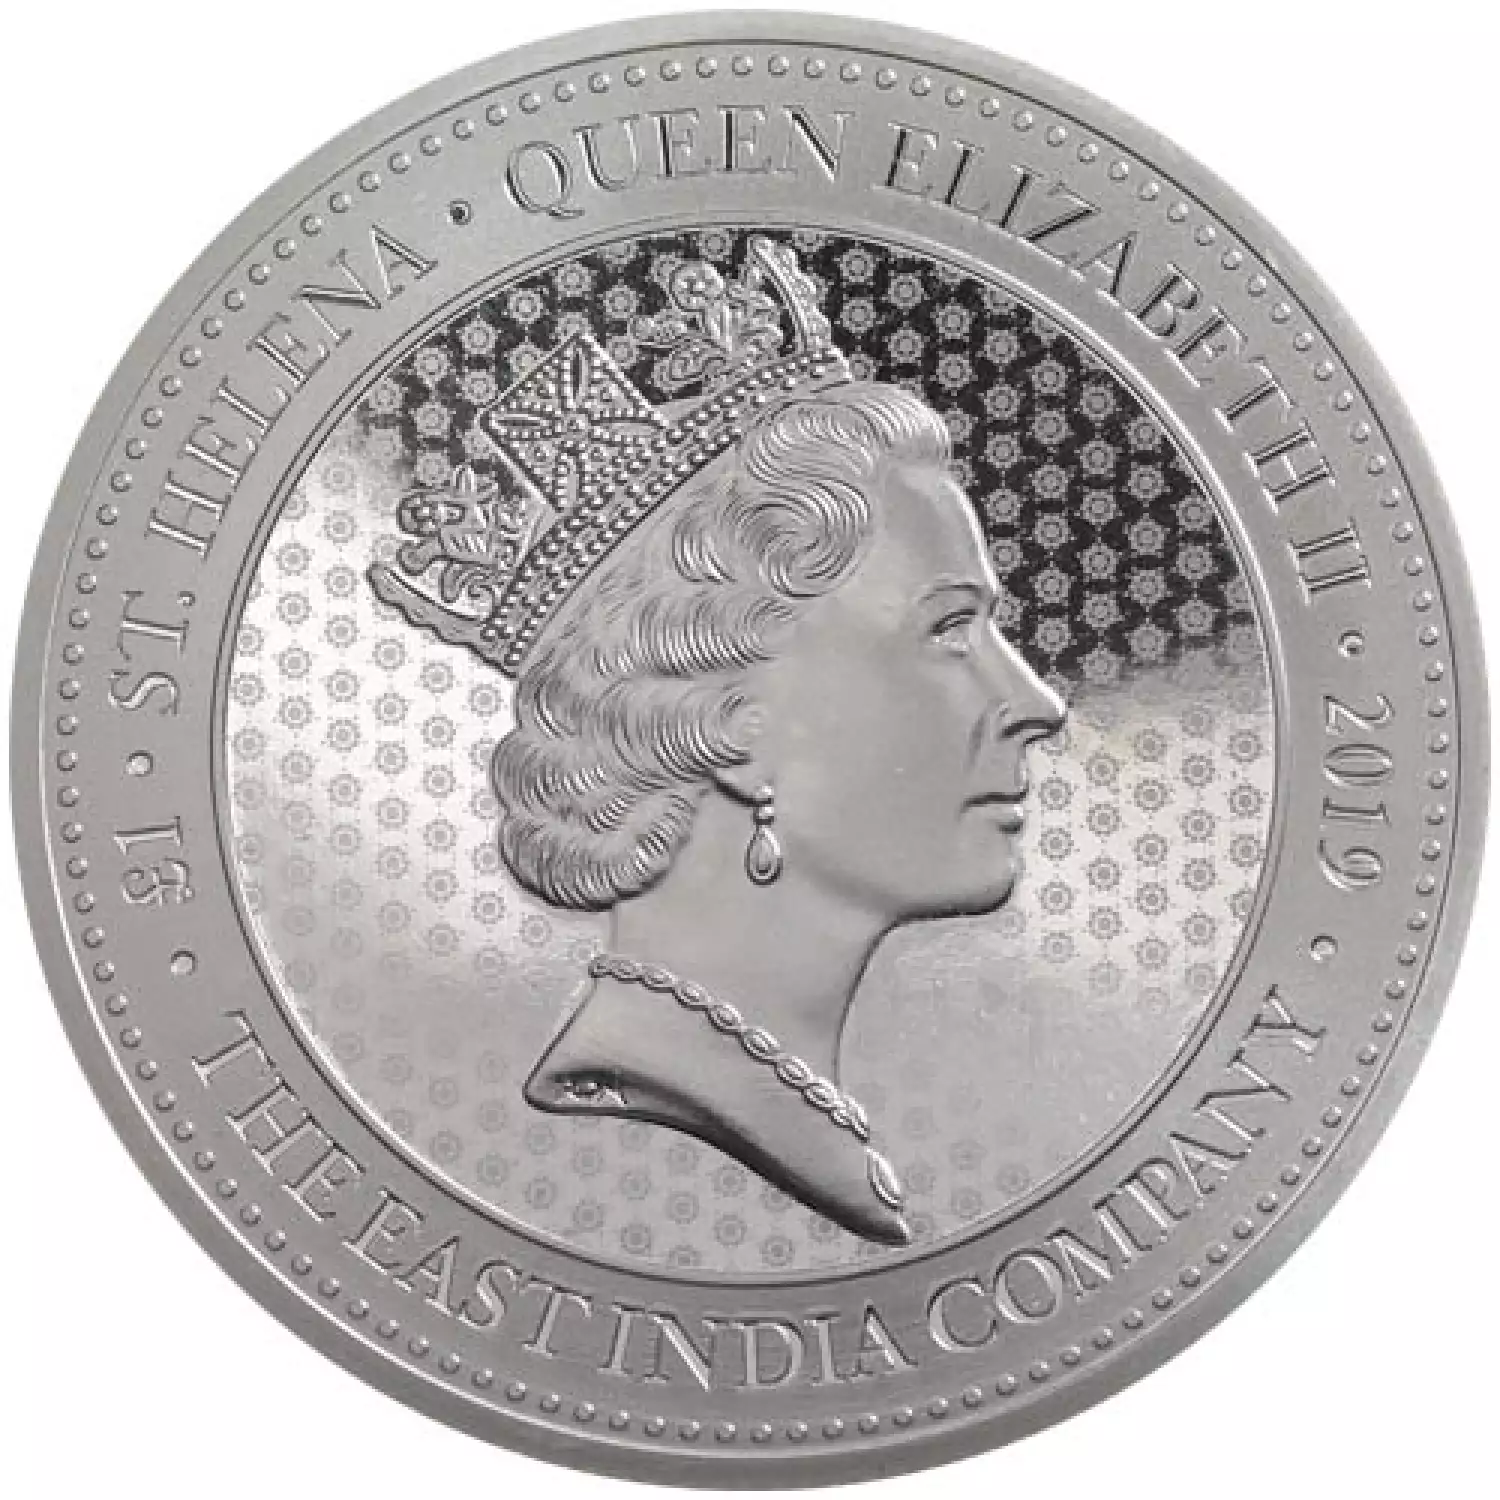 2019 1 oz Saint Helena Silver Spade Guinea Shield Coin (2)